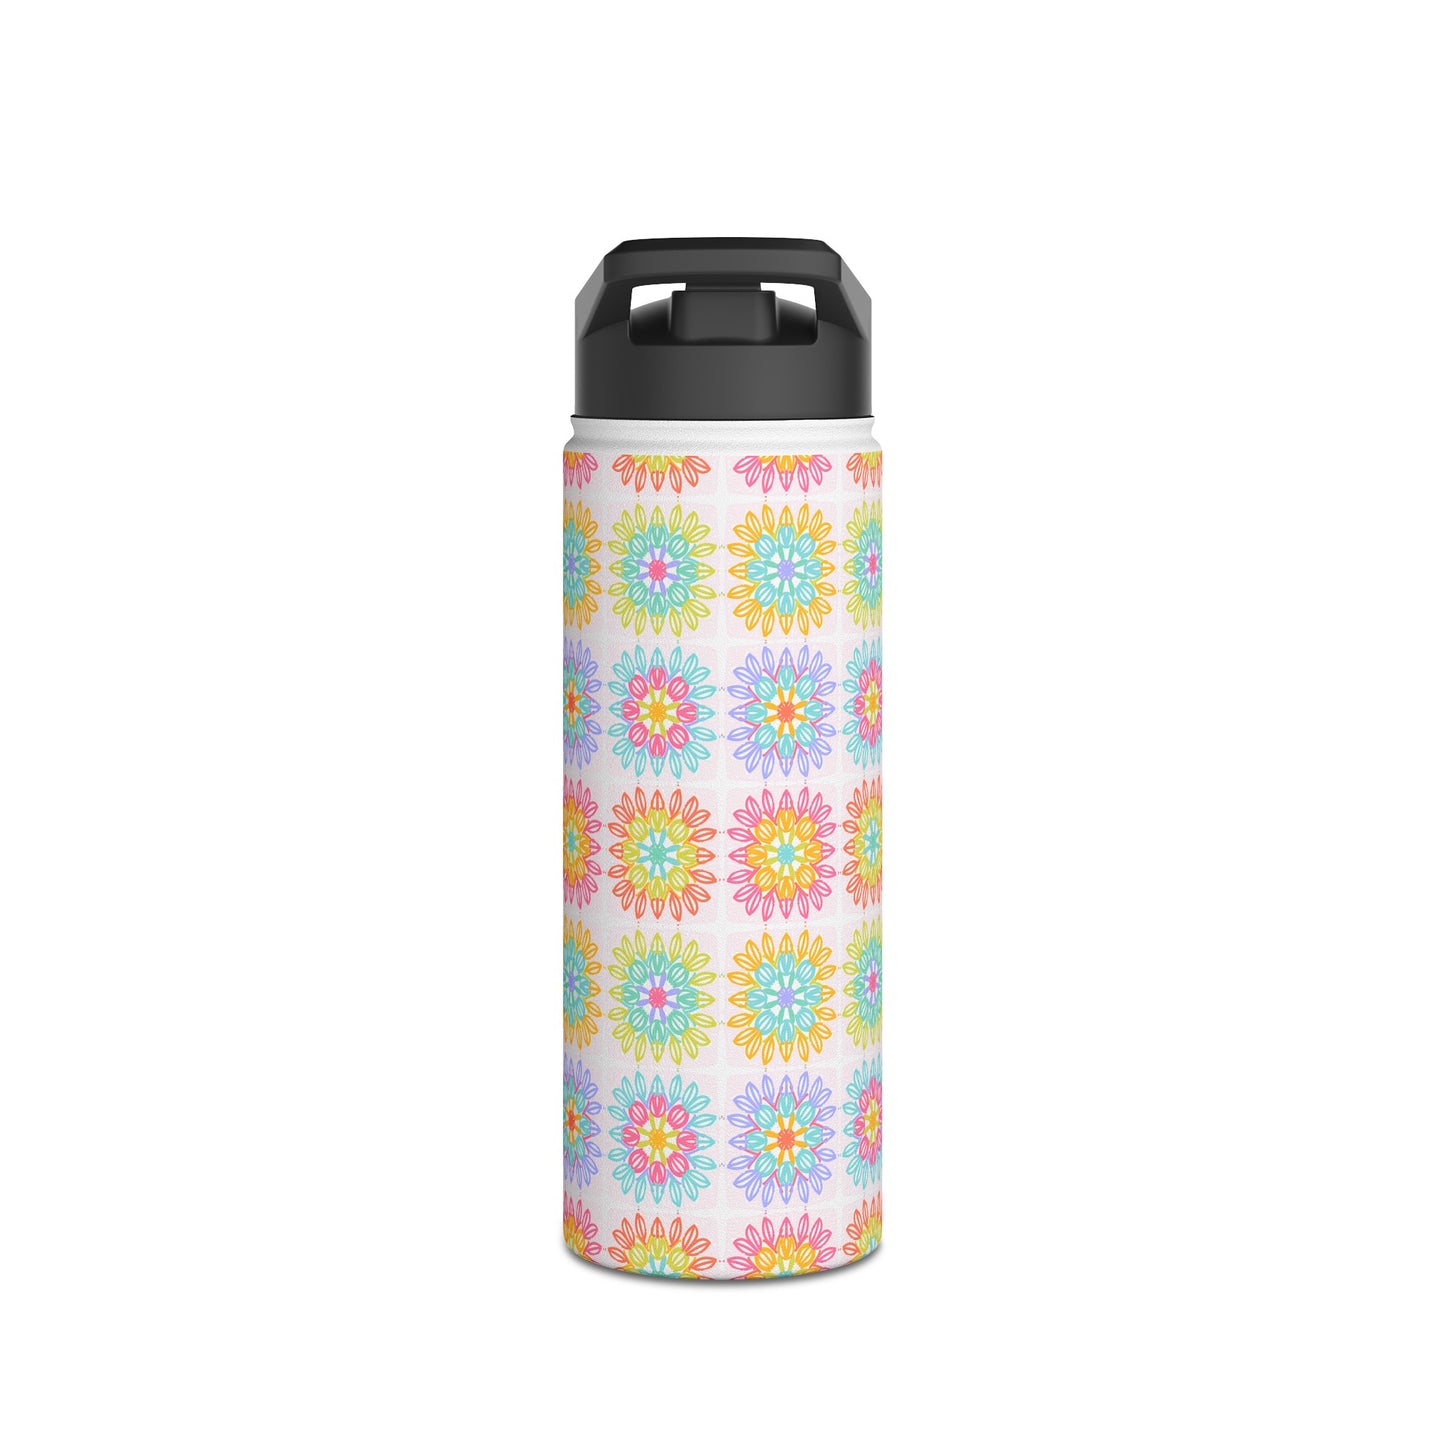 Granny Square in Summer Lovin’ | Stainless Steel Water Bottle, Standard Lid | Crochet | Knit | Craft